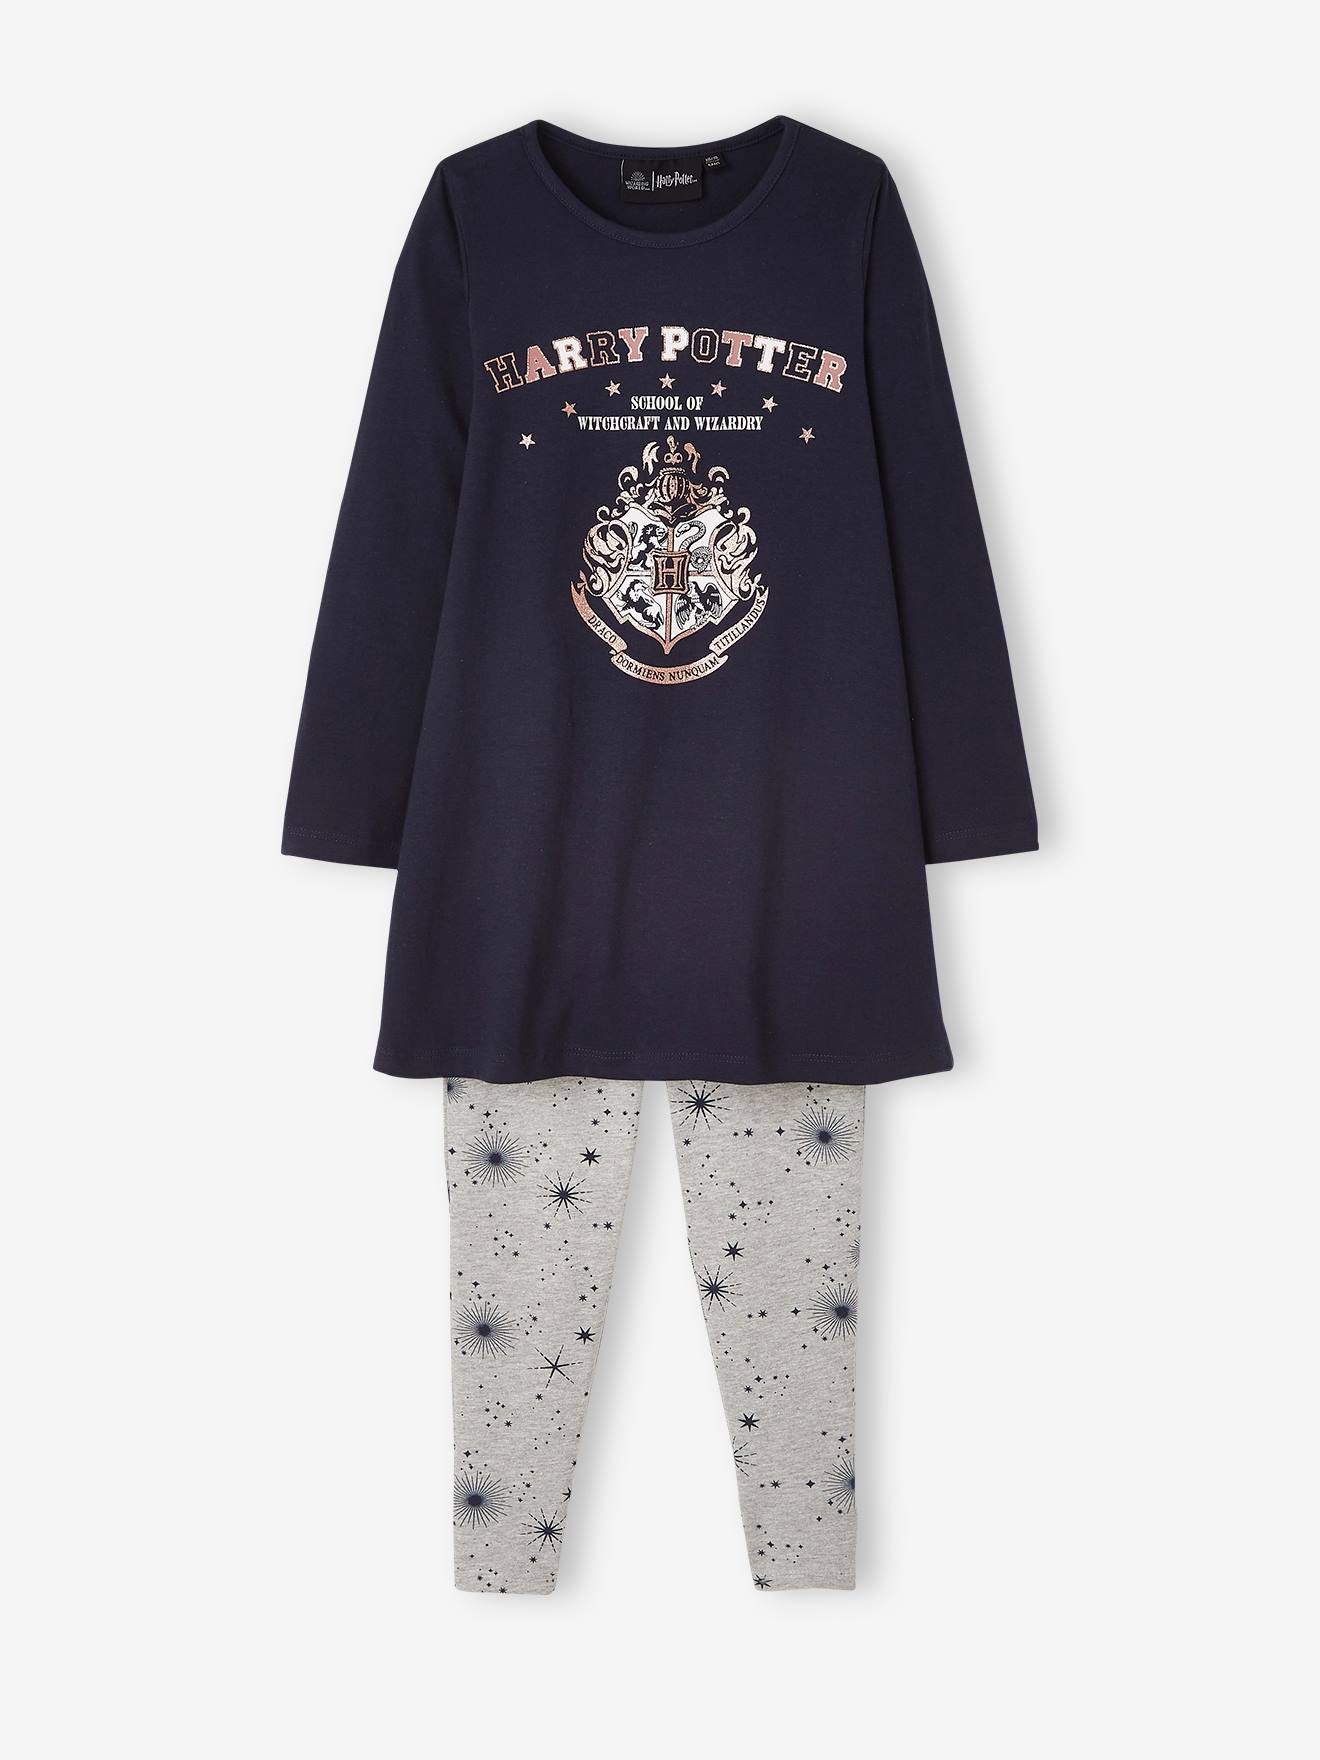 Harry Potter Nightie + Leggings Combo for Girls blue dark solid with design